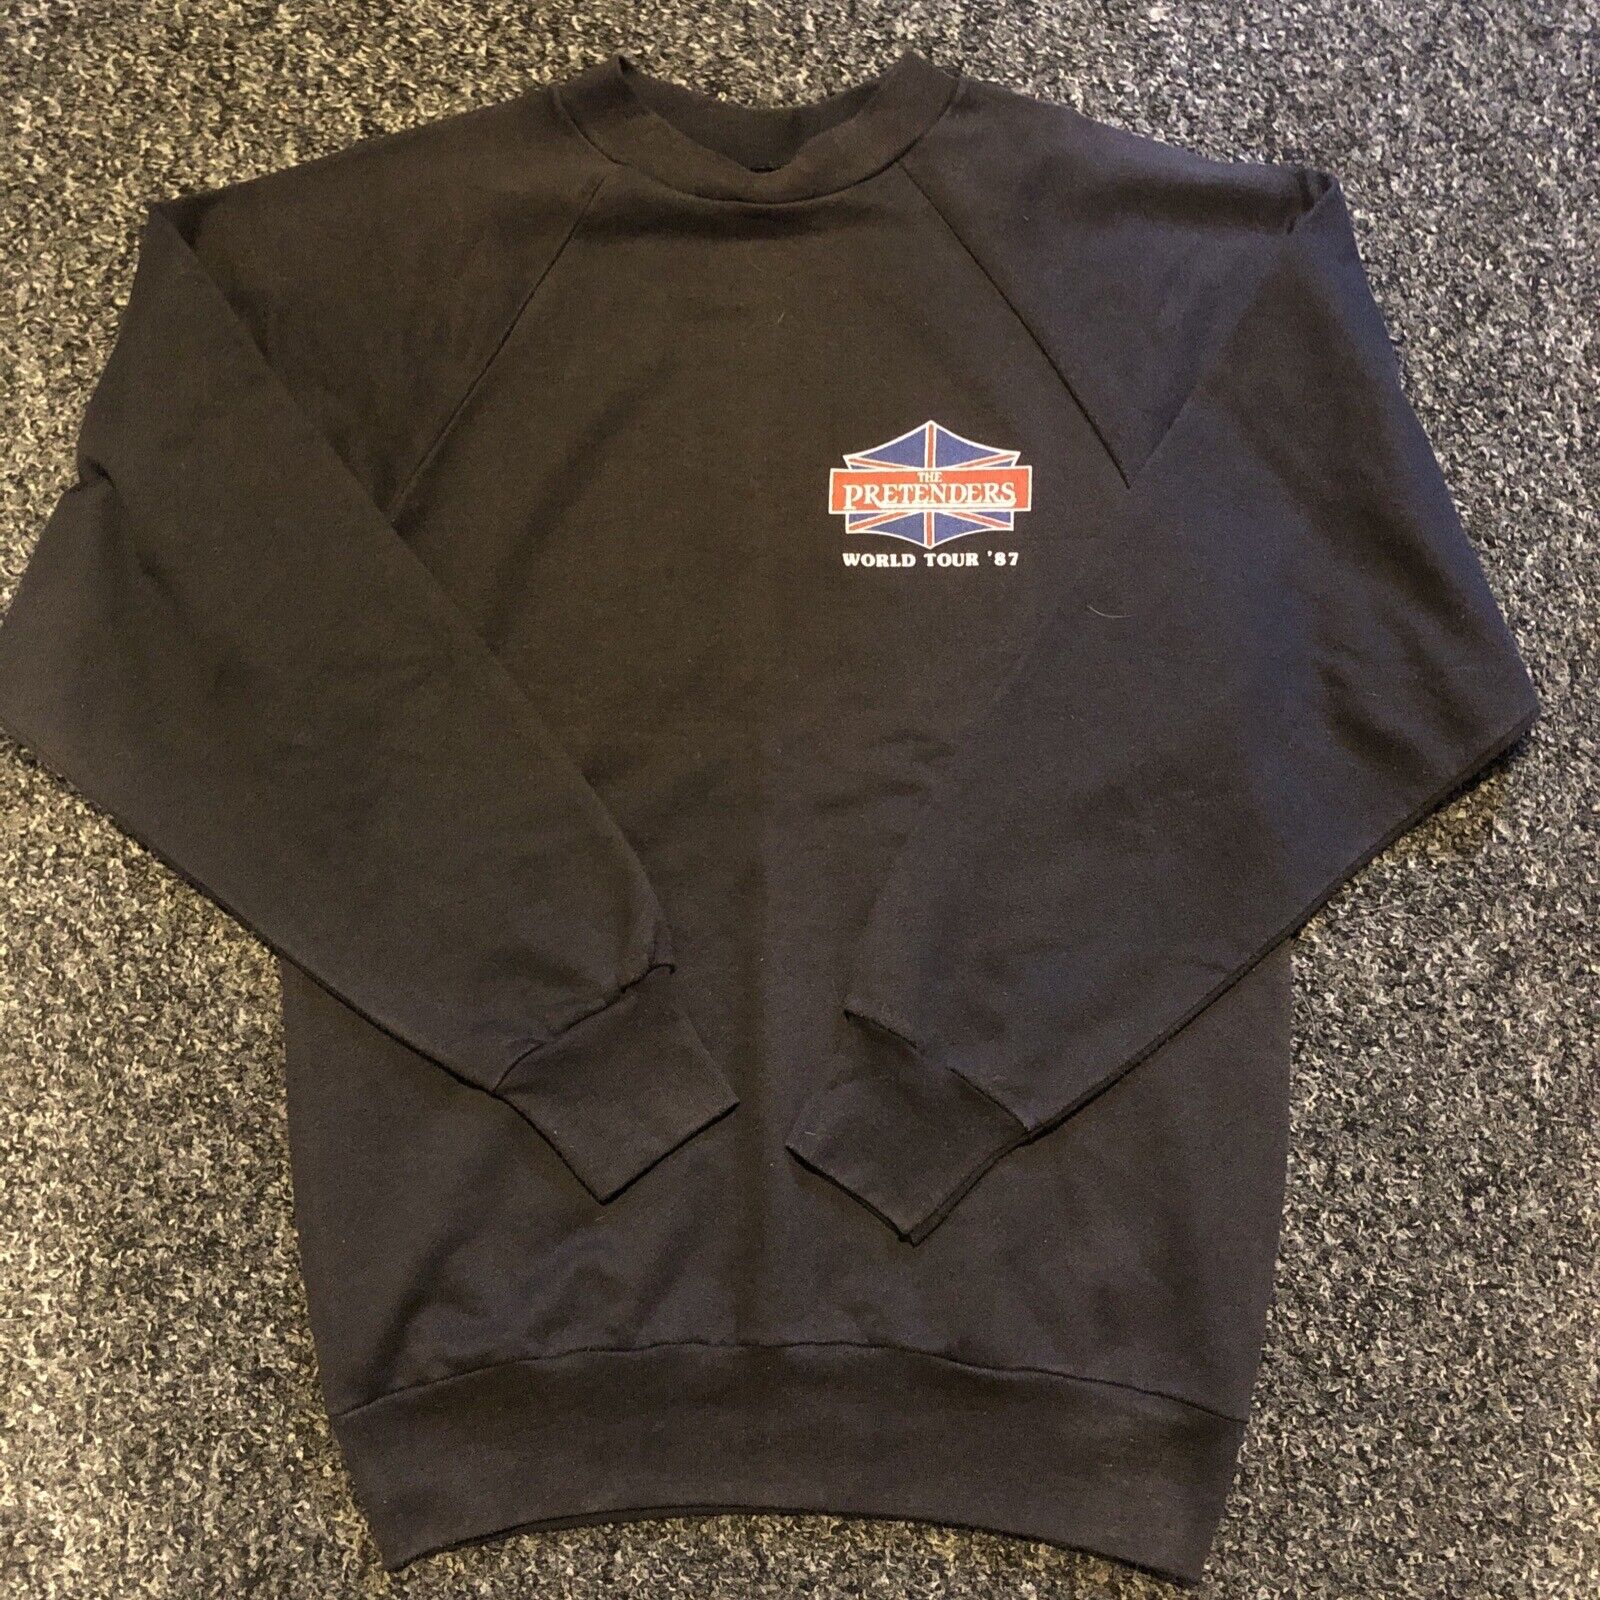 The Pretenders Vintage 1987 World Tour Jumper Sweatshirt USA WRIGHTS SIZE M RARE